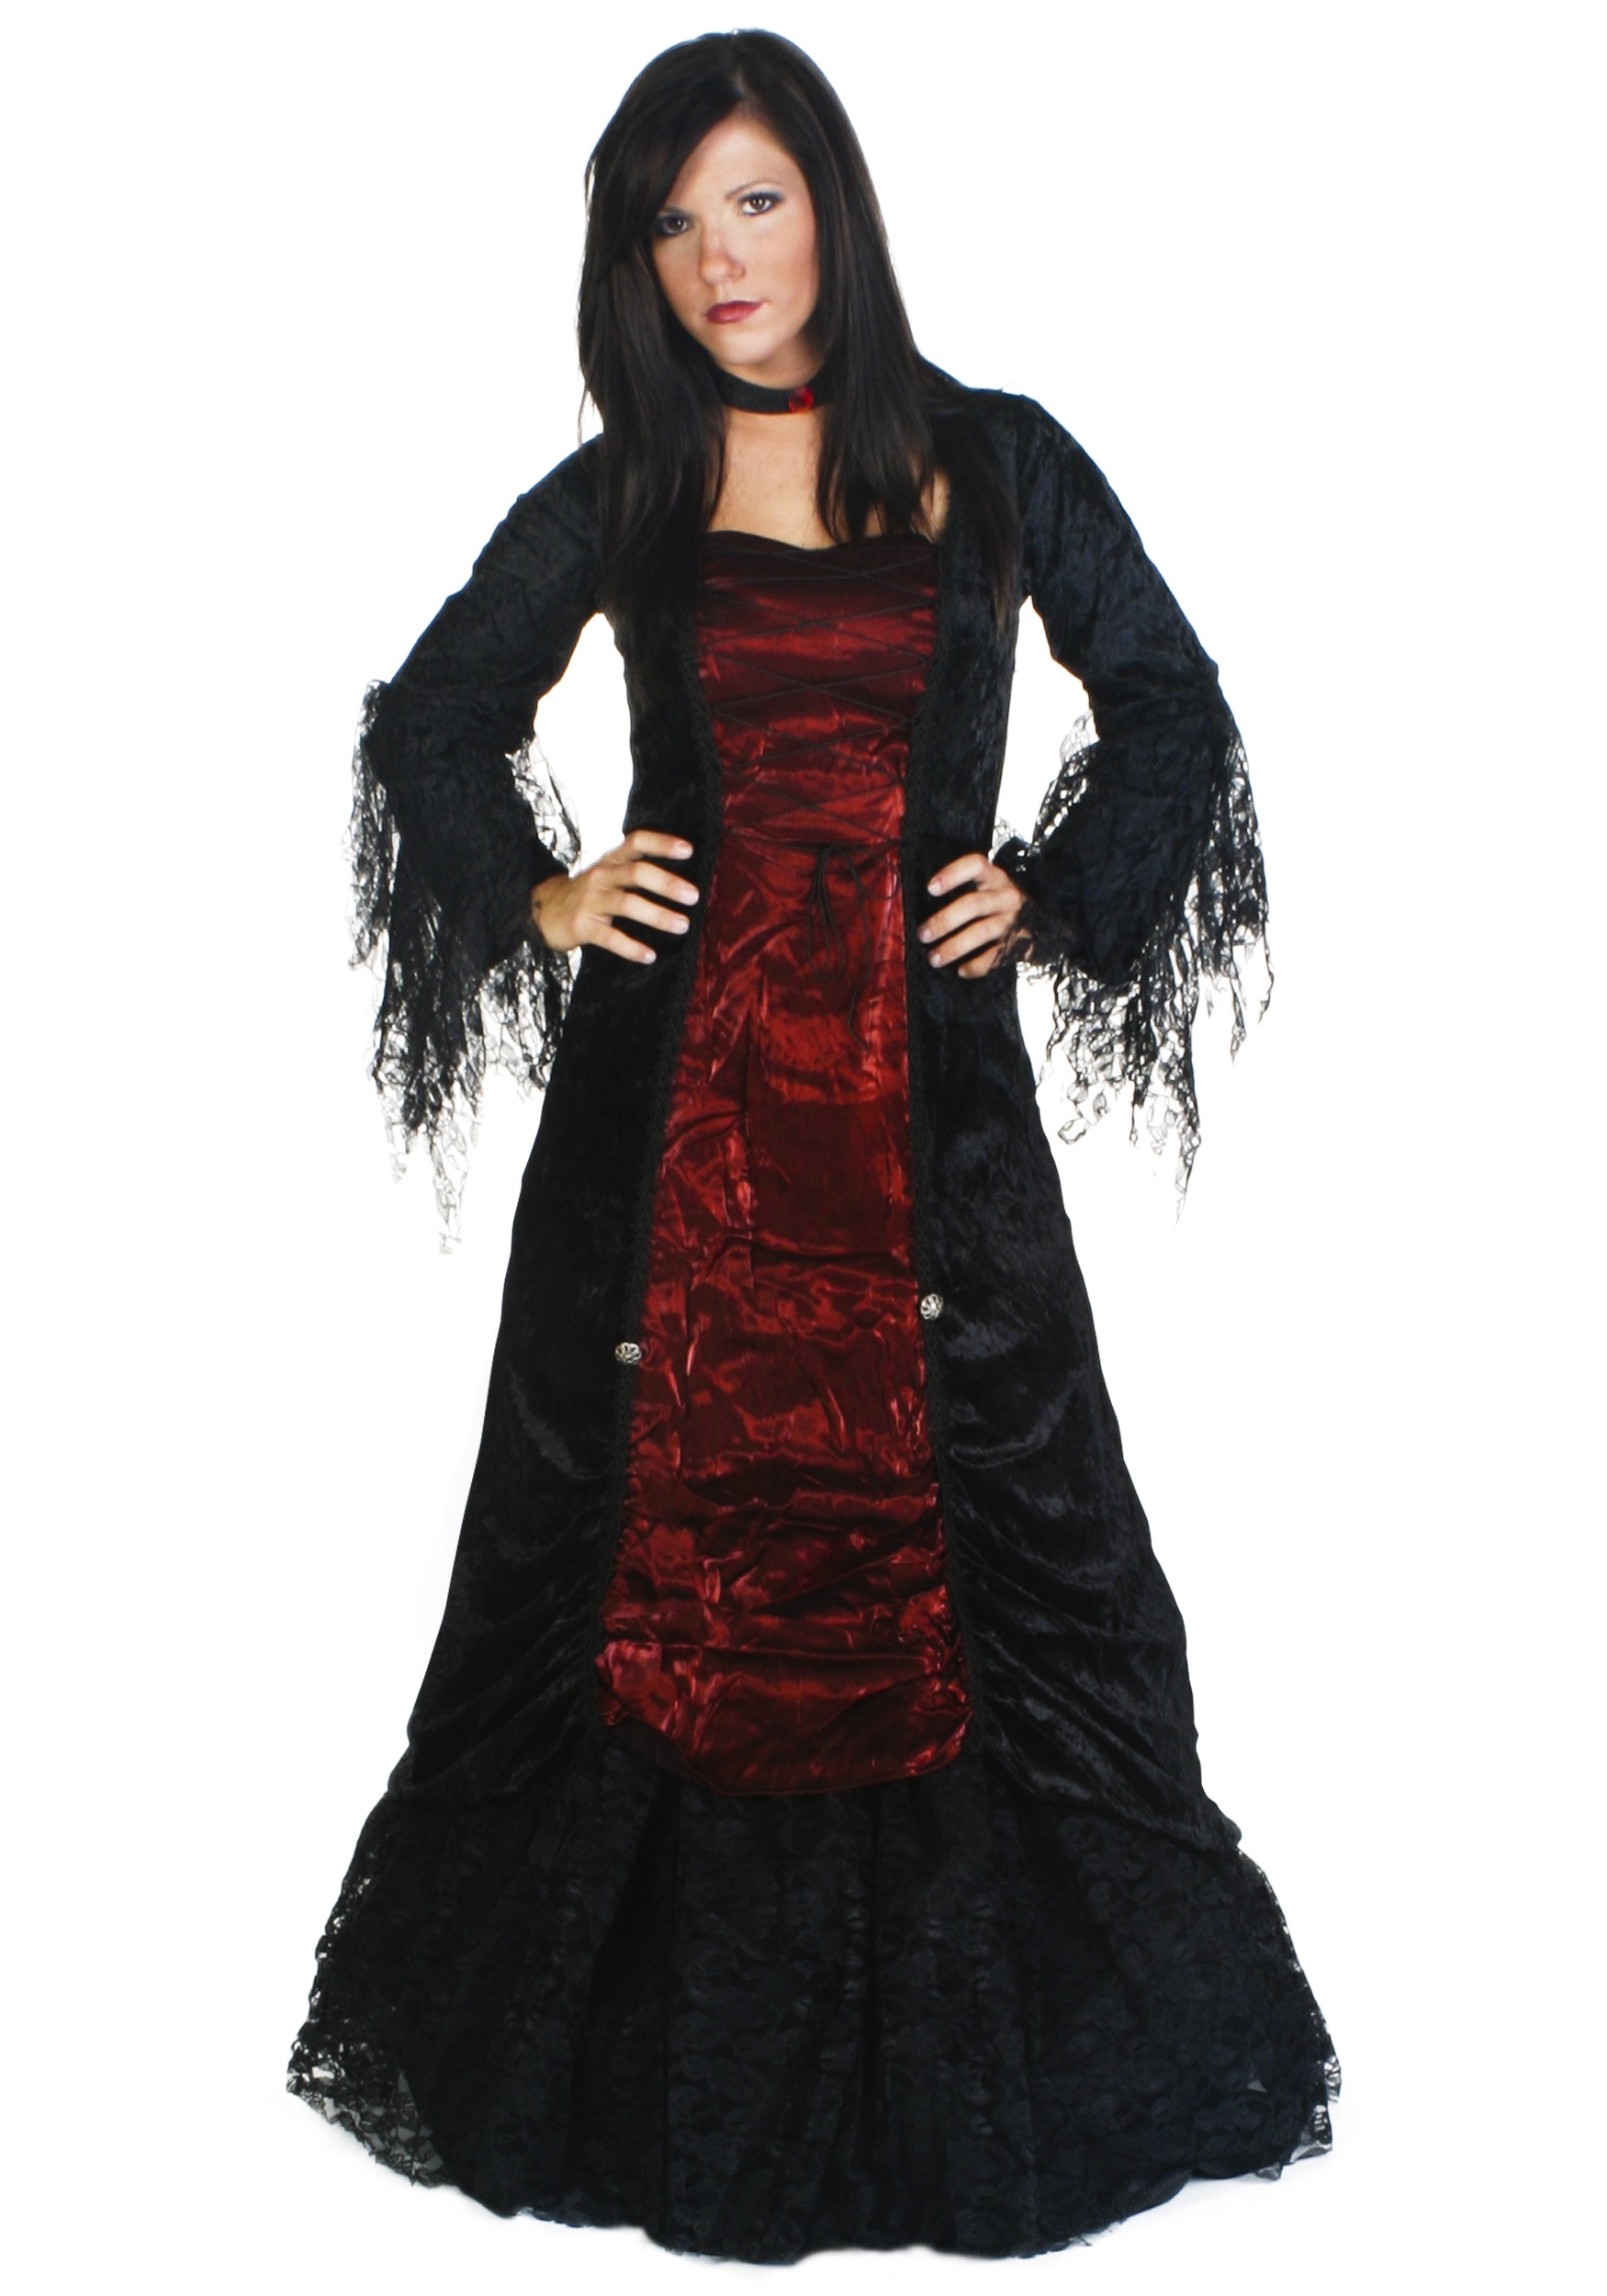 Women's Gothic Vampire Costume - Halloween Costume Ideas 2021 Devil Costume For Women Makeup